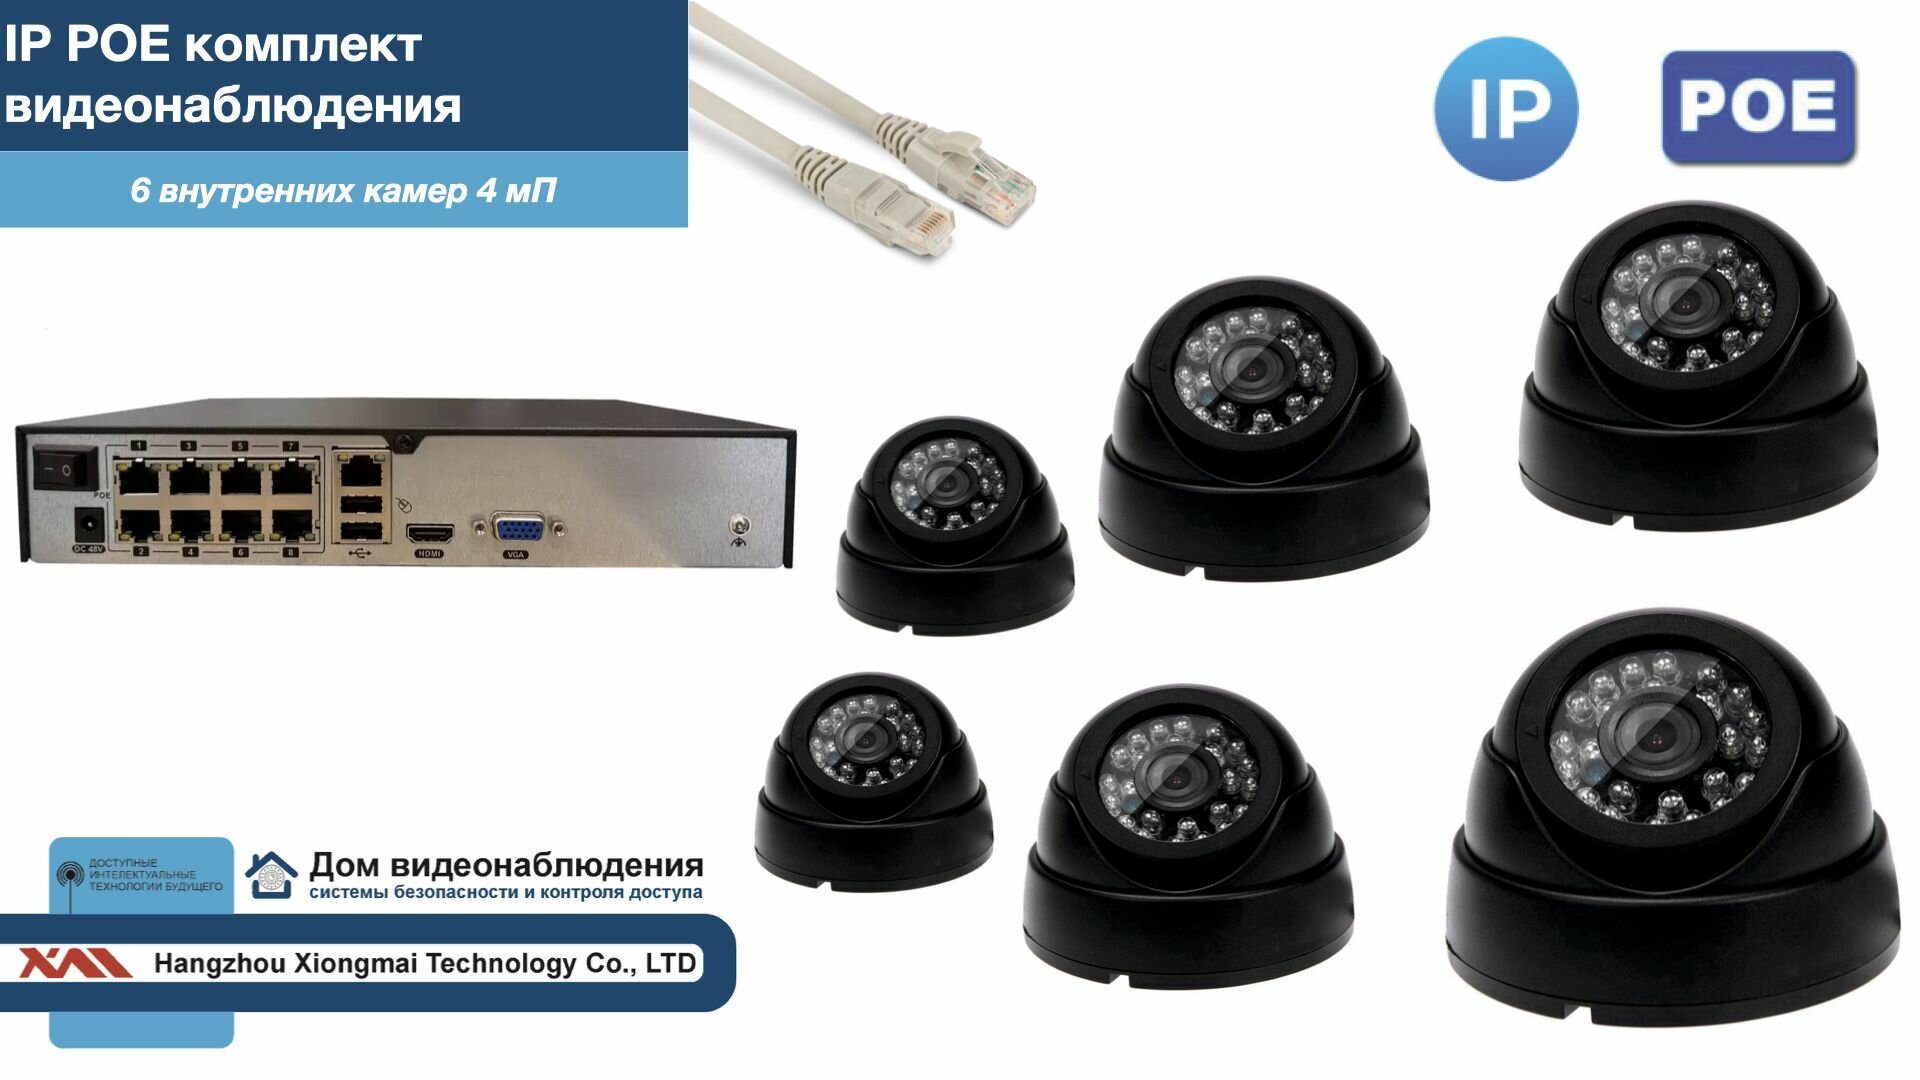 Полный IP POE комплект видеонаблюдения на 6 камер (KIT6IPPOE300B4MP-2)